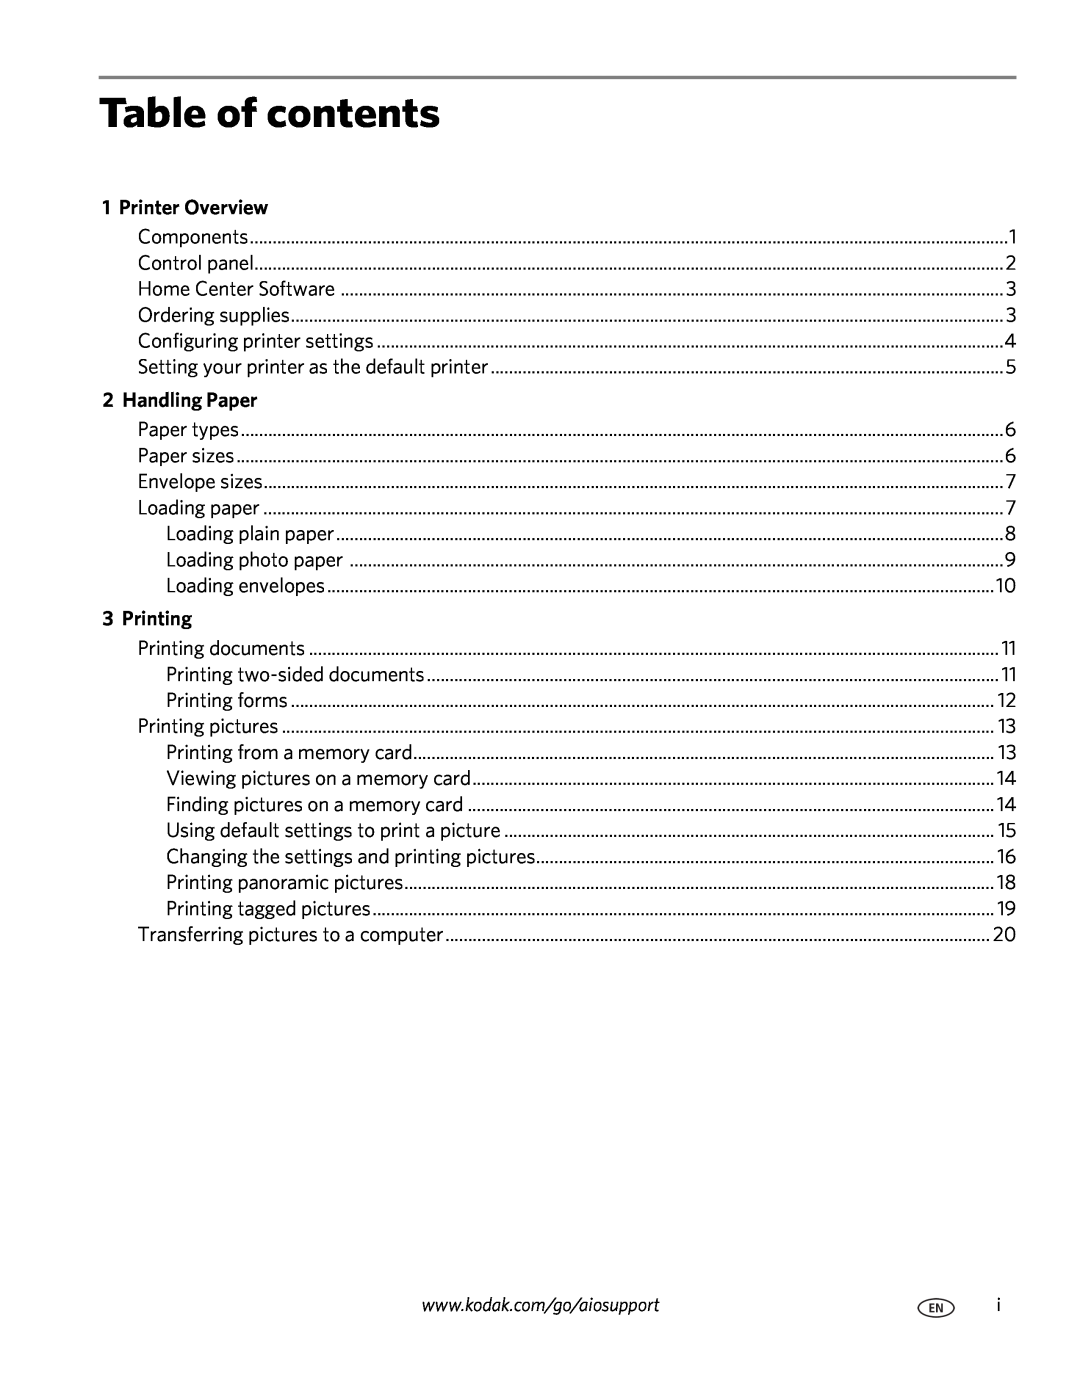 Kodak C110 manual Table of contents, Printer Overview, Handling Paper, Printing 